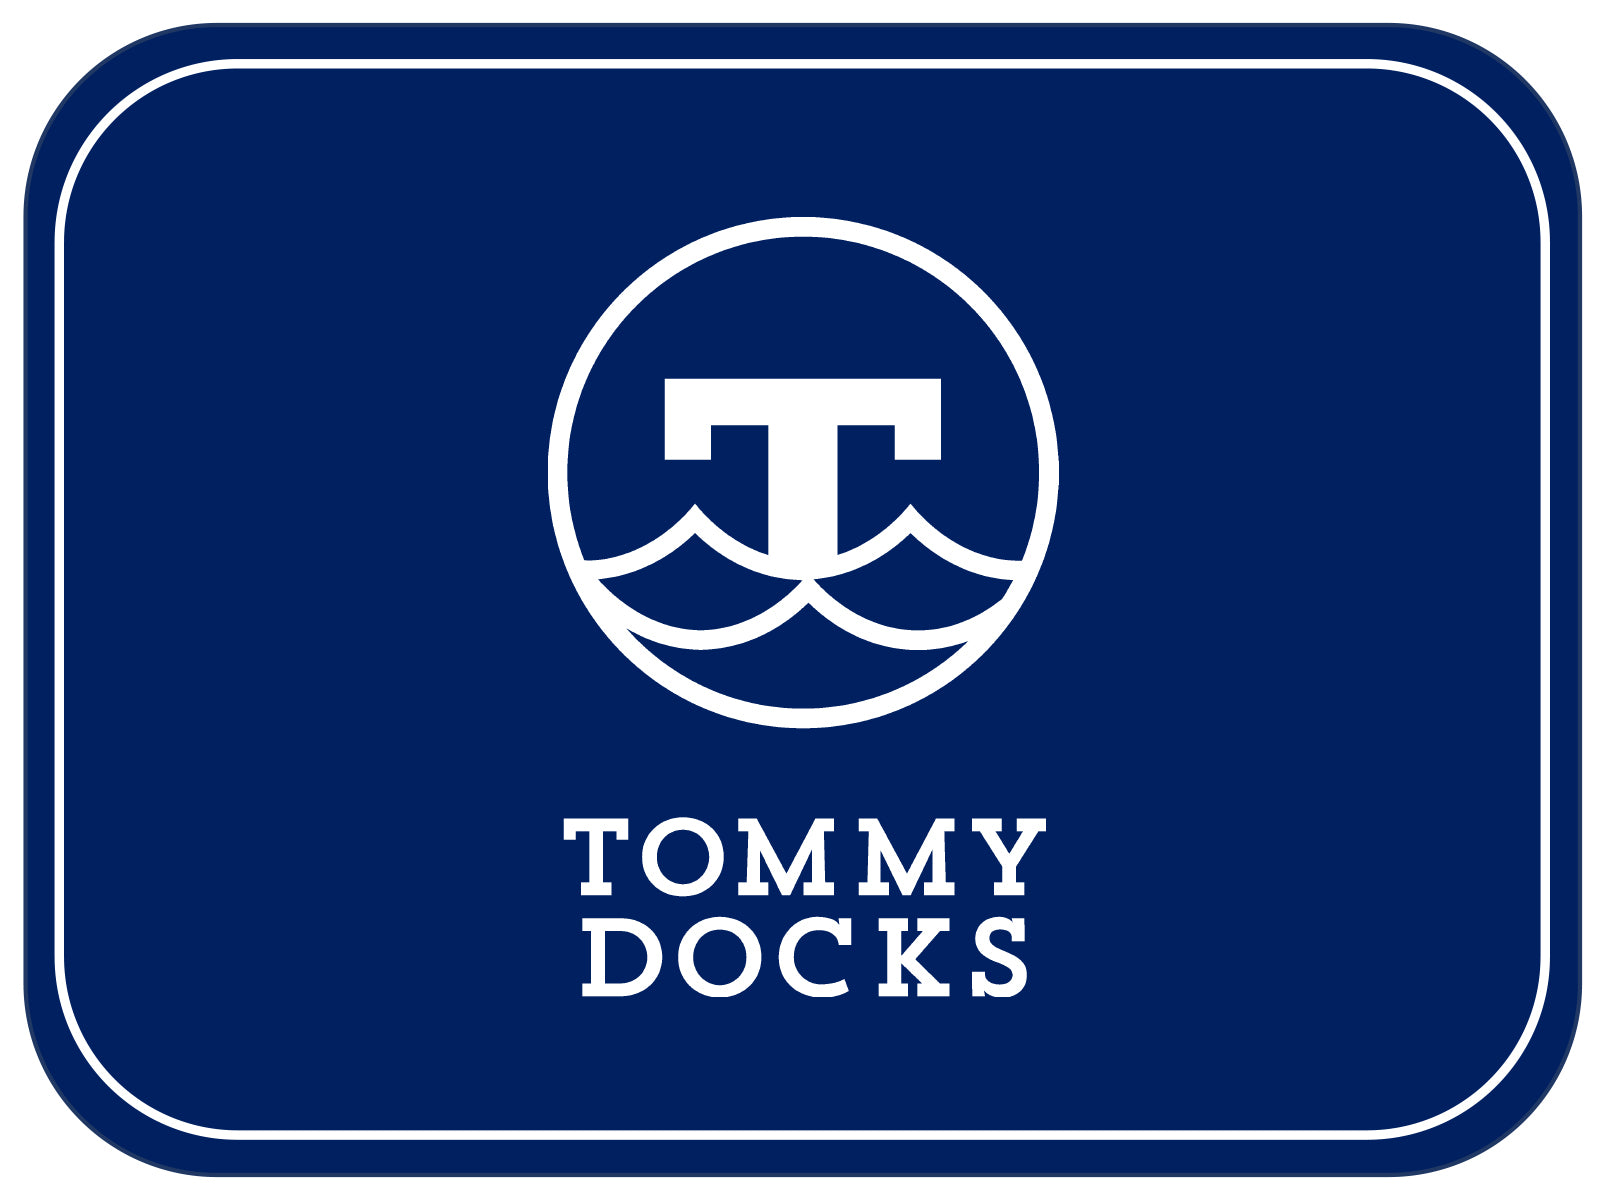 Gift Card : Tommy Docks - Boat Dock Sets, Dock Hardware & Dock Accessories